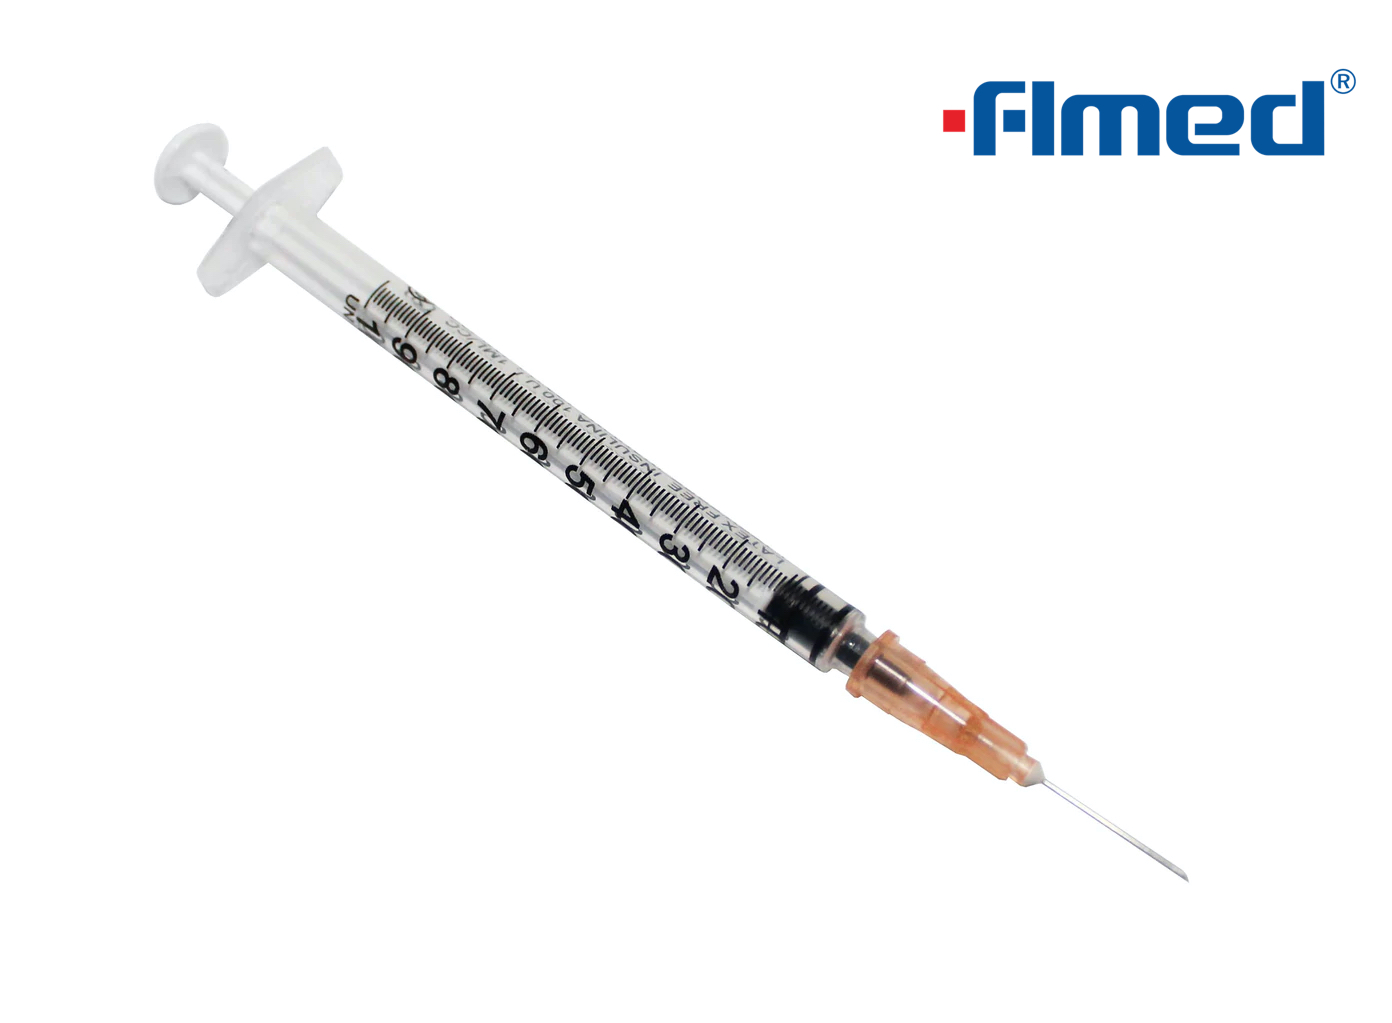 1 ml de insulina seringa e agulha 25g x 16mm CE marcada